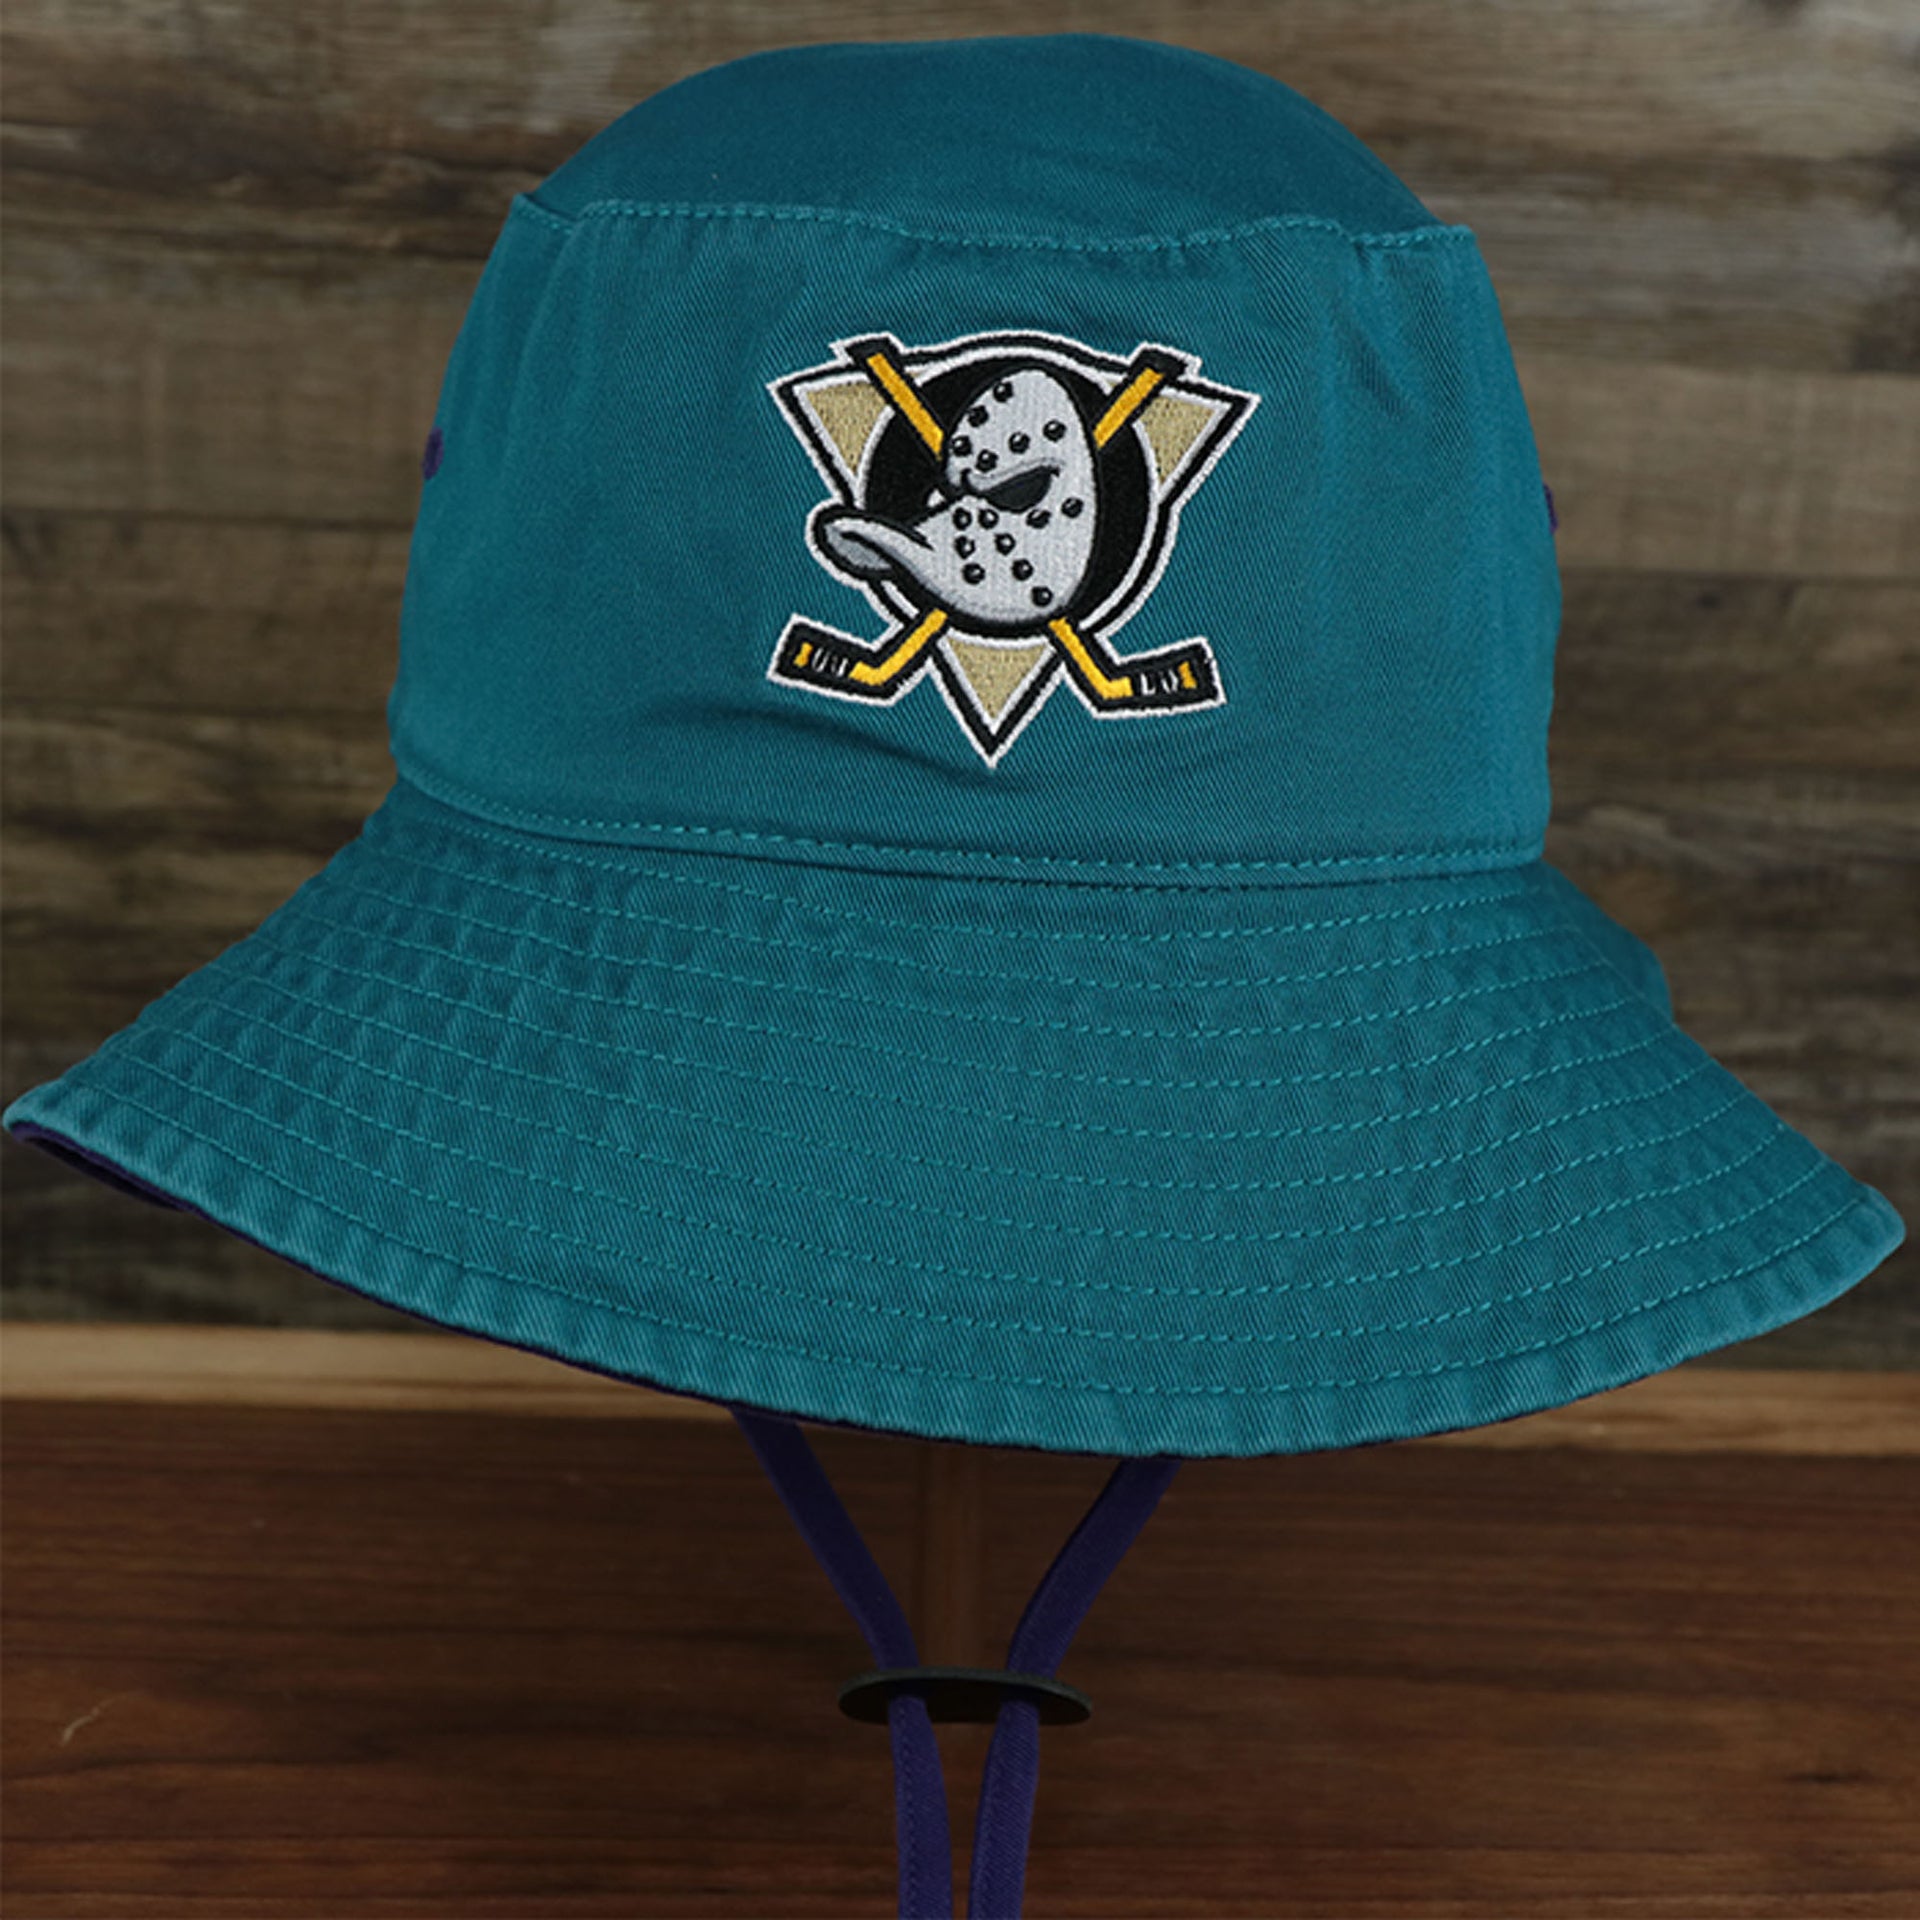 The front of the Mighty Ducks Vintage 90s Anaheim Ducks Grape 5s Matching Bucket Hat | 47 Brand, Dark Teal